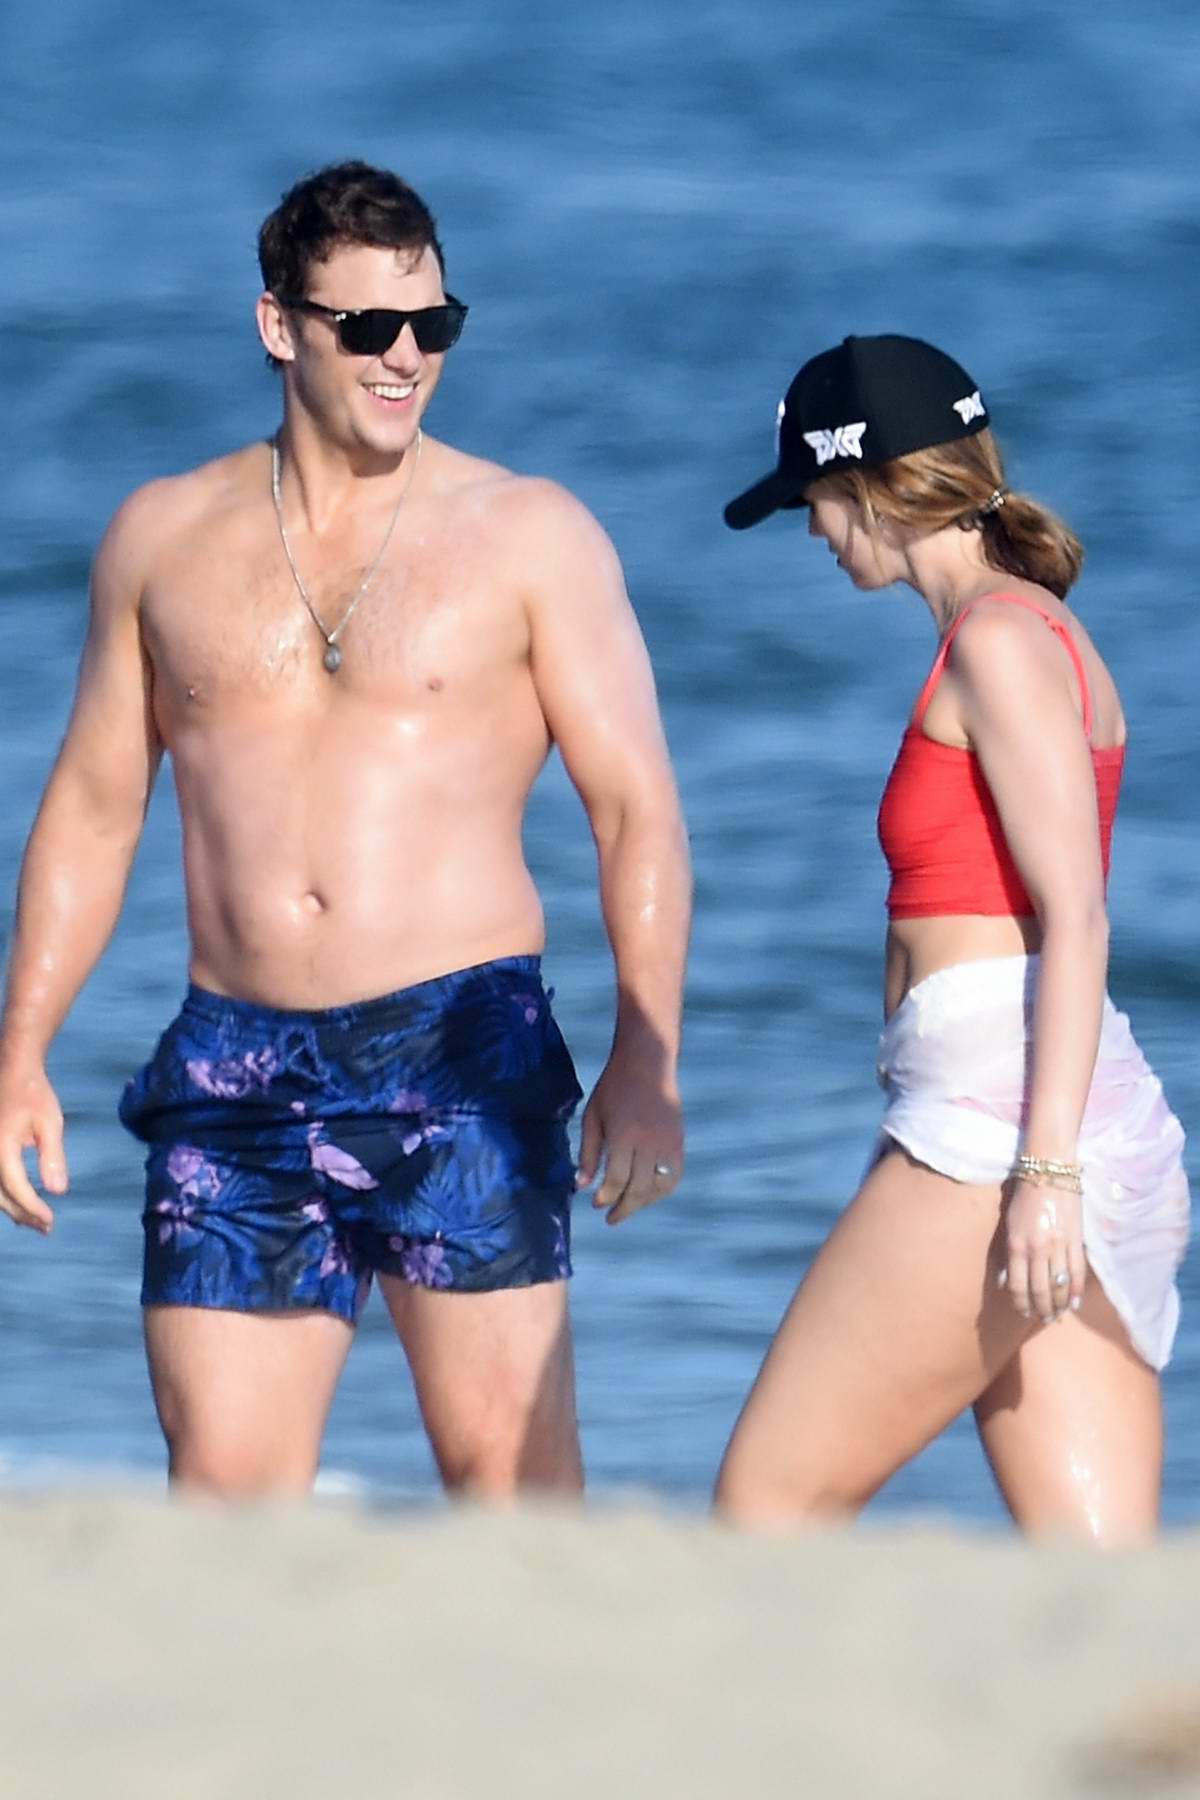 Katherine Schwarzenegger Slips Into A Red Bikini For A Beach Day With